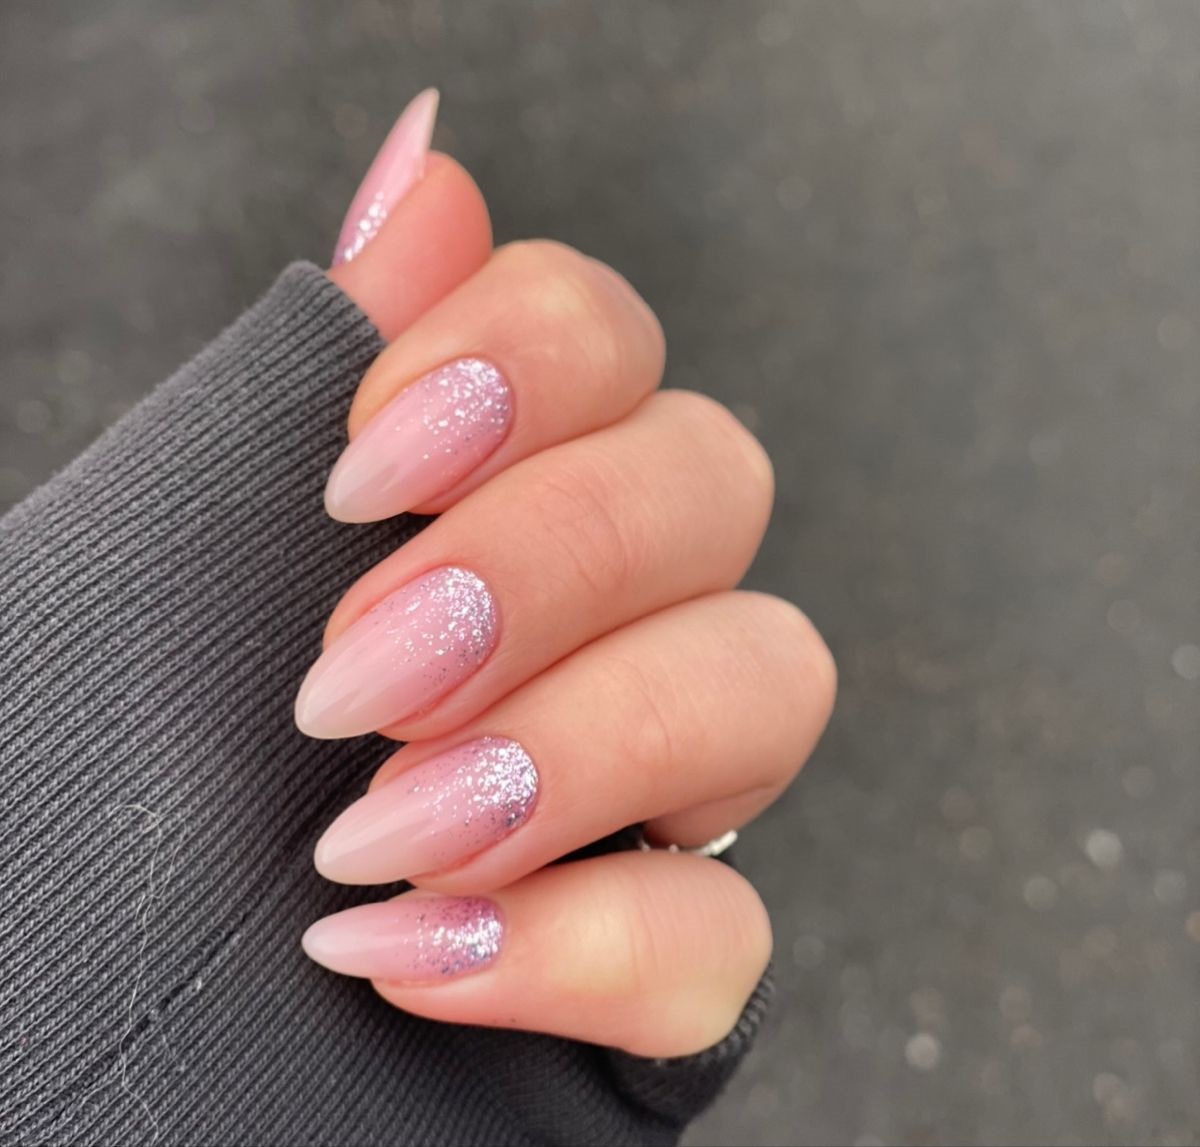 Attractive nails